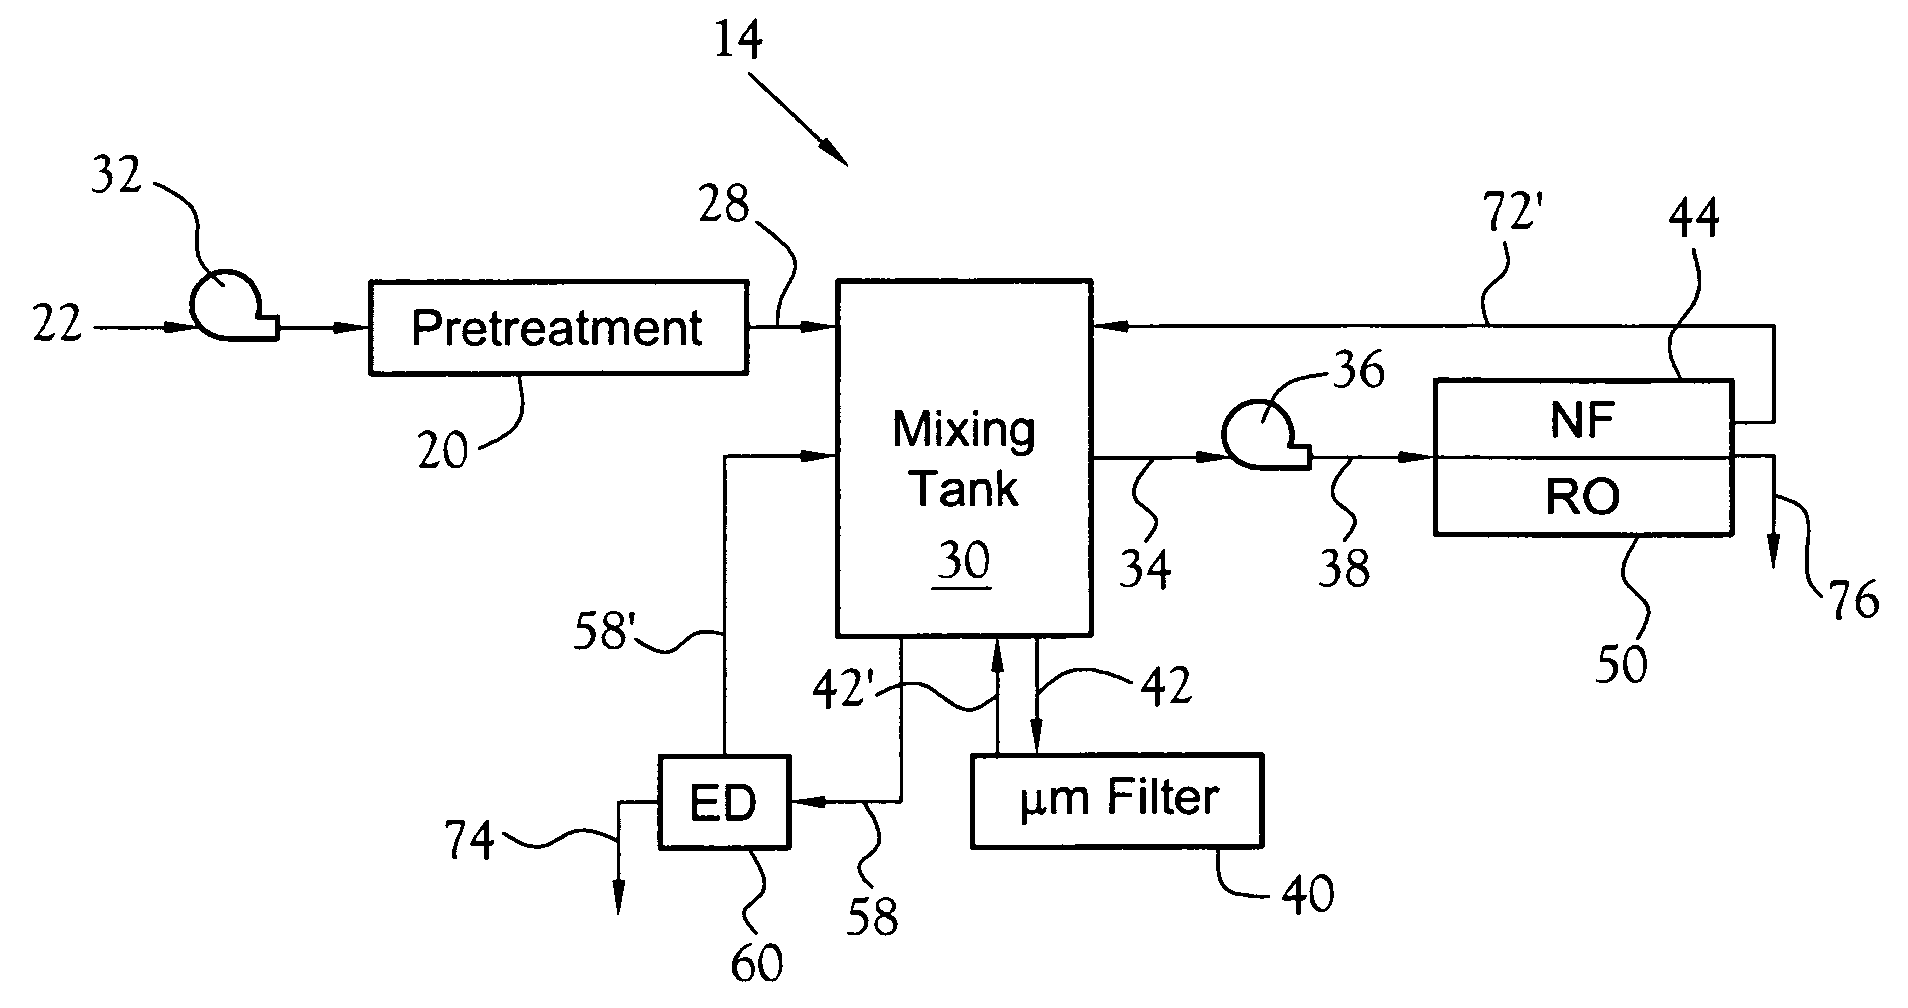 Integrated electro-pressure membrane deionization system